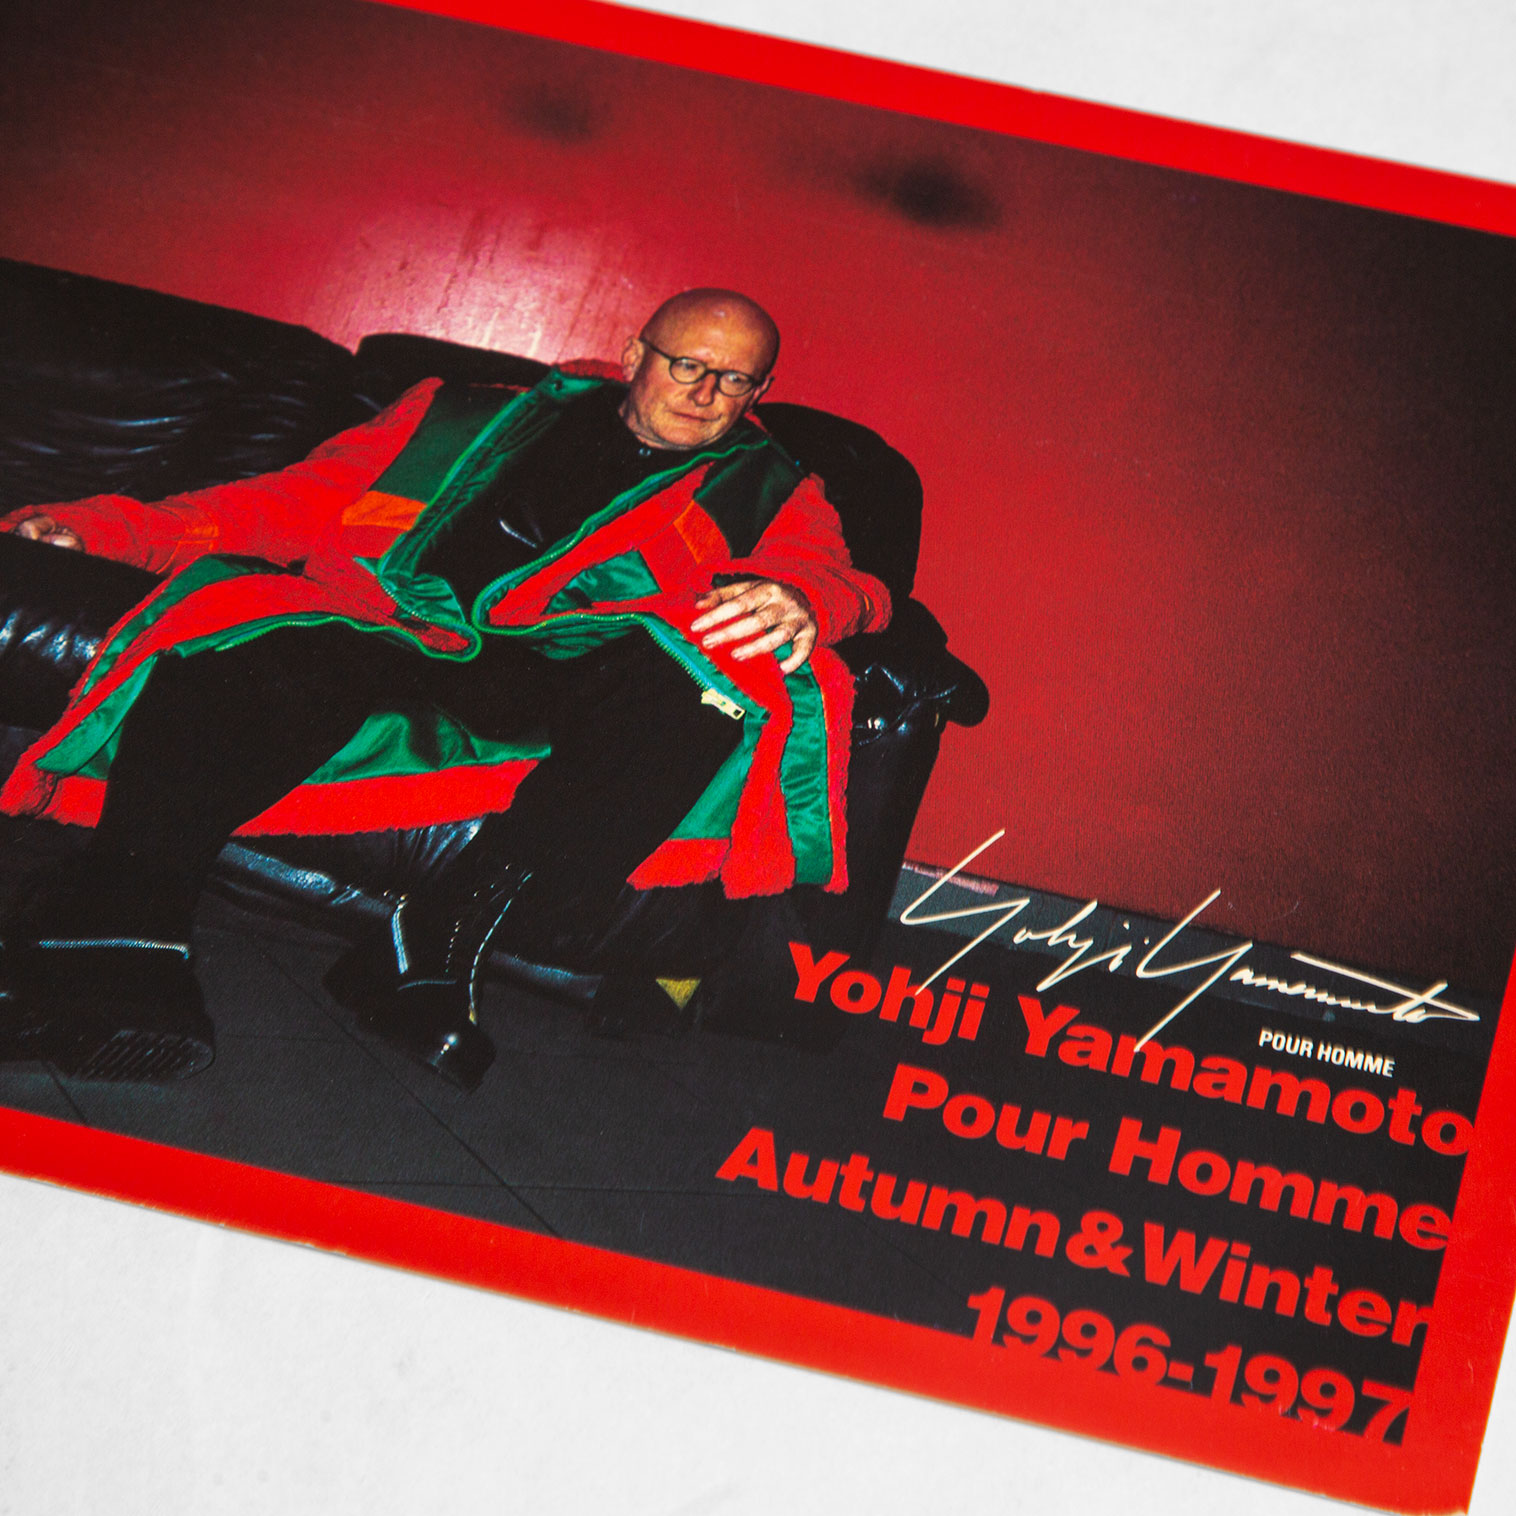 Yohji Yamamoto POUR HOMME AUTUMN & WINTER 1996 1997 Invitation Card